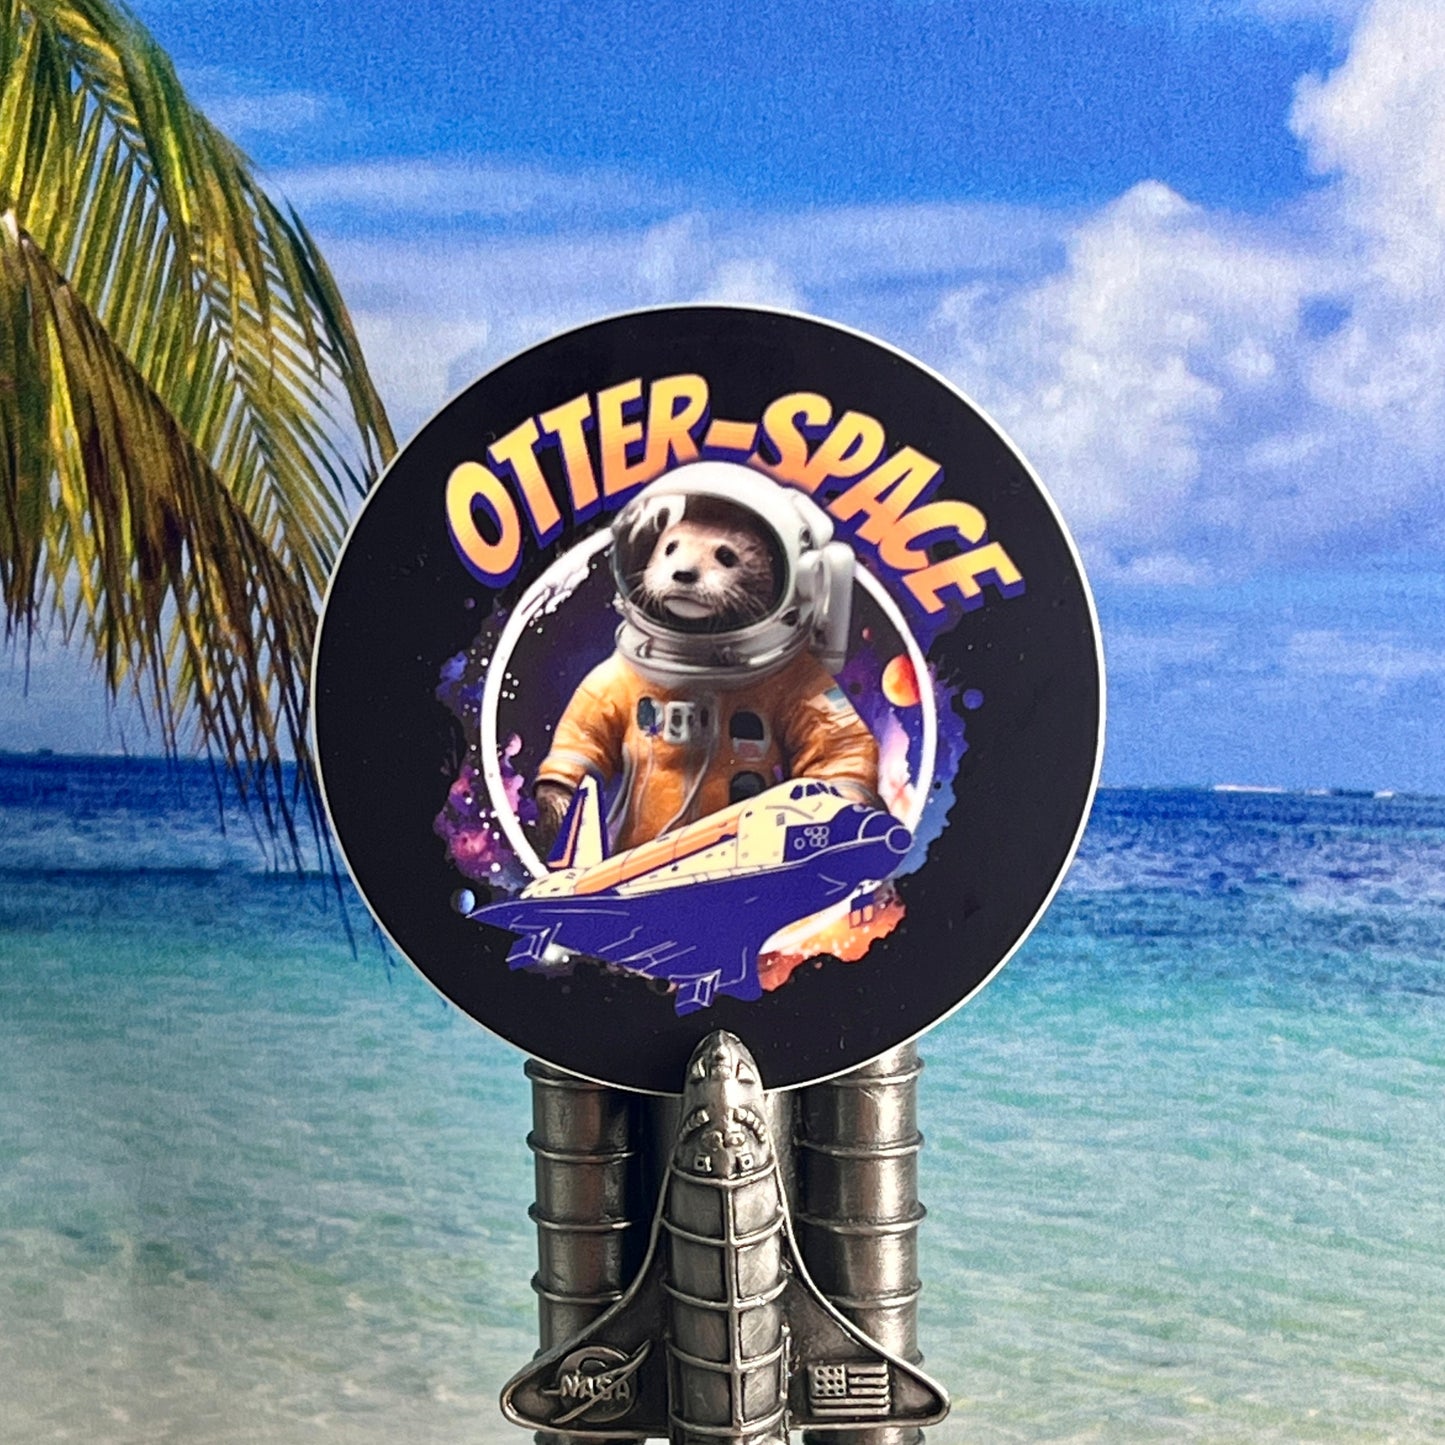 "Otter Space" Waterproof Sticker Decal